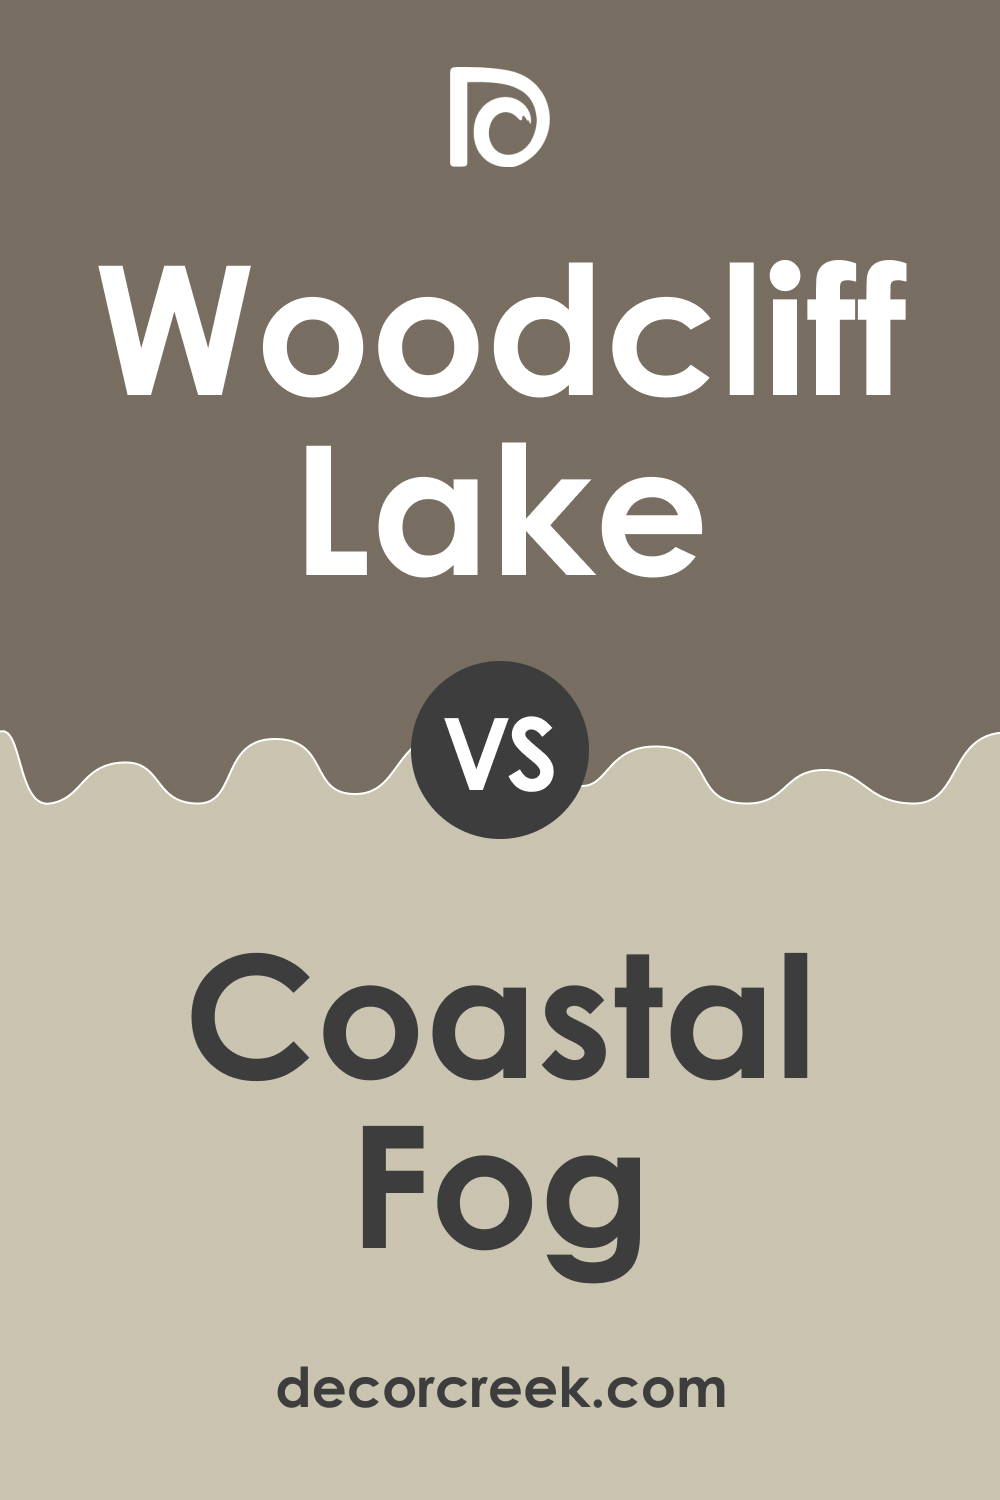 Woodcliff Lake 980 vs. BM 976 Coastal Fog